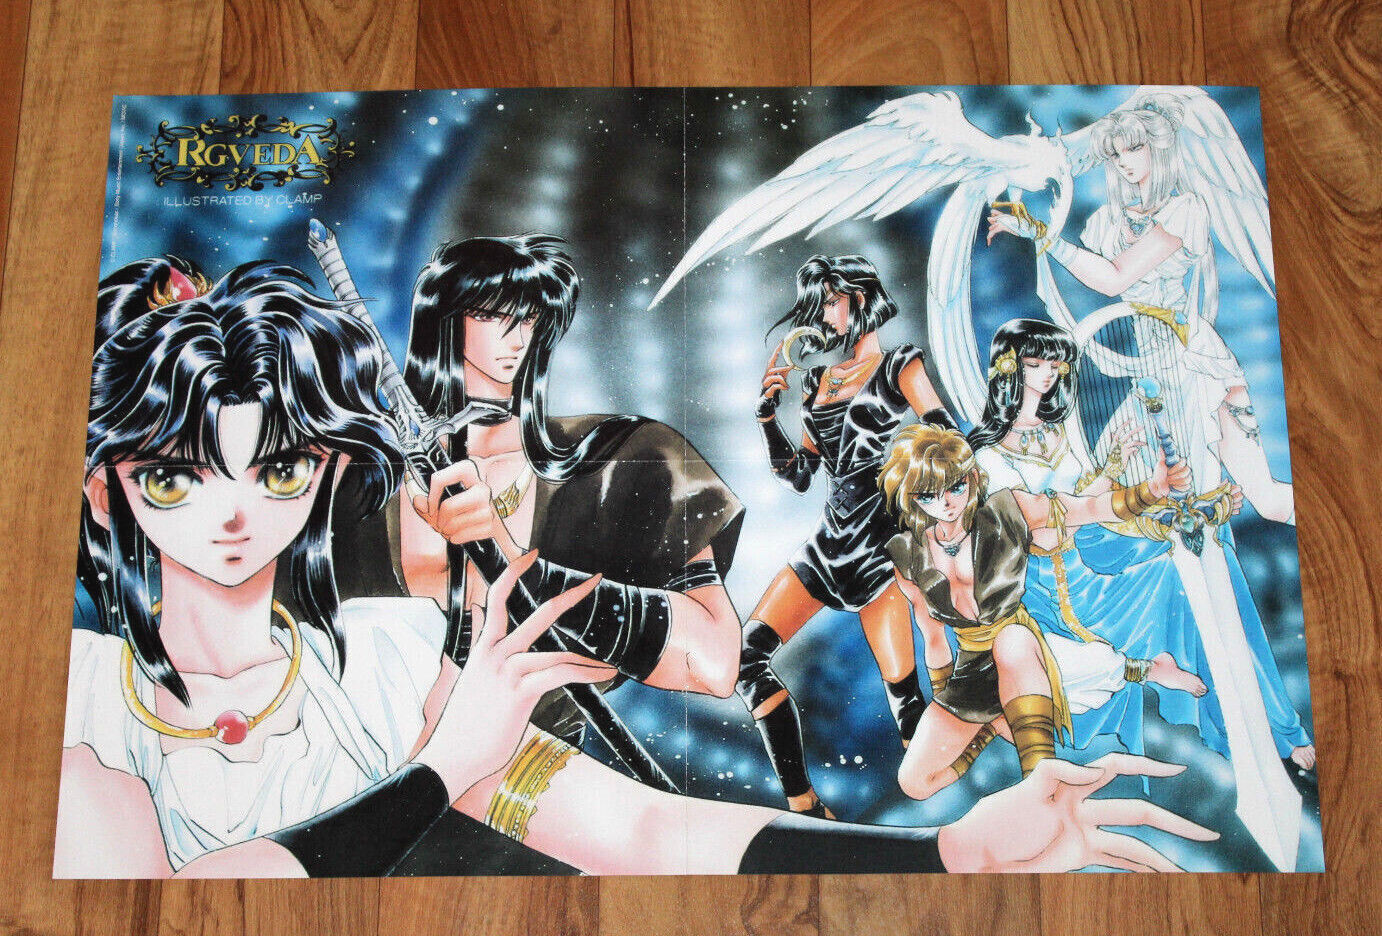 RG Veda Created By Clamp Very Rare Manga Anime Poster 58x40cm.